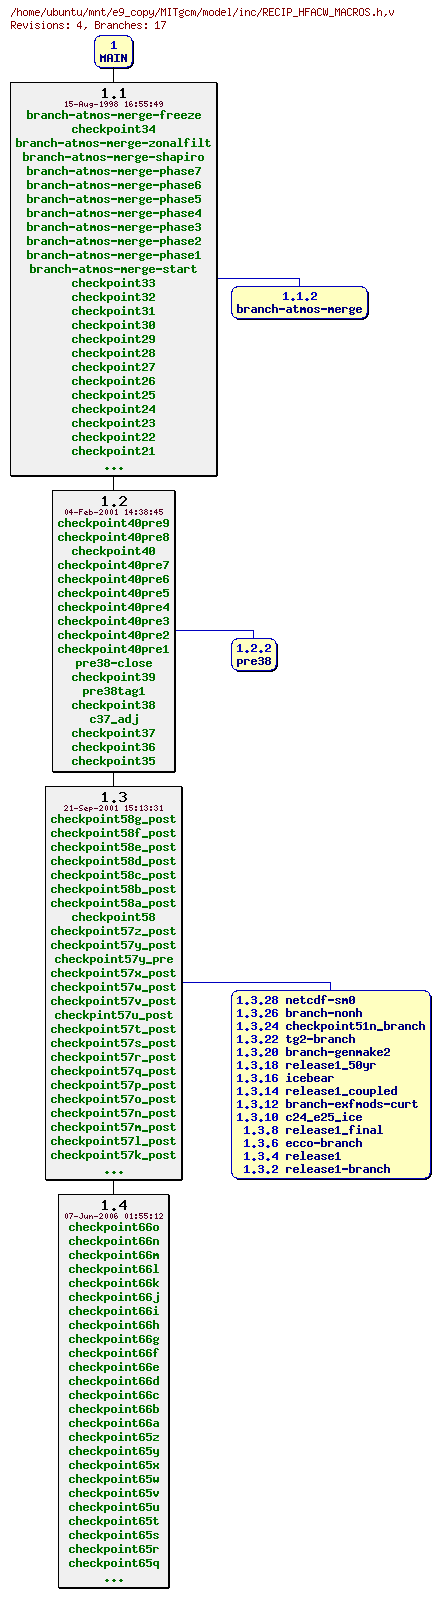 Revisions of MITgcm/model/inc/RECIP_HFACW_MACROS.h